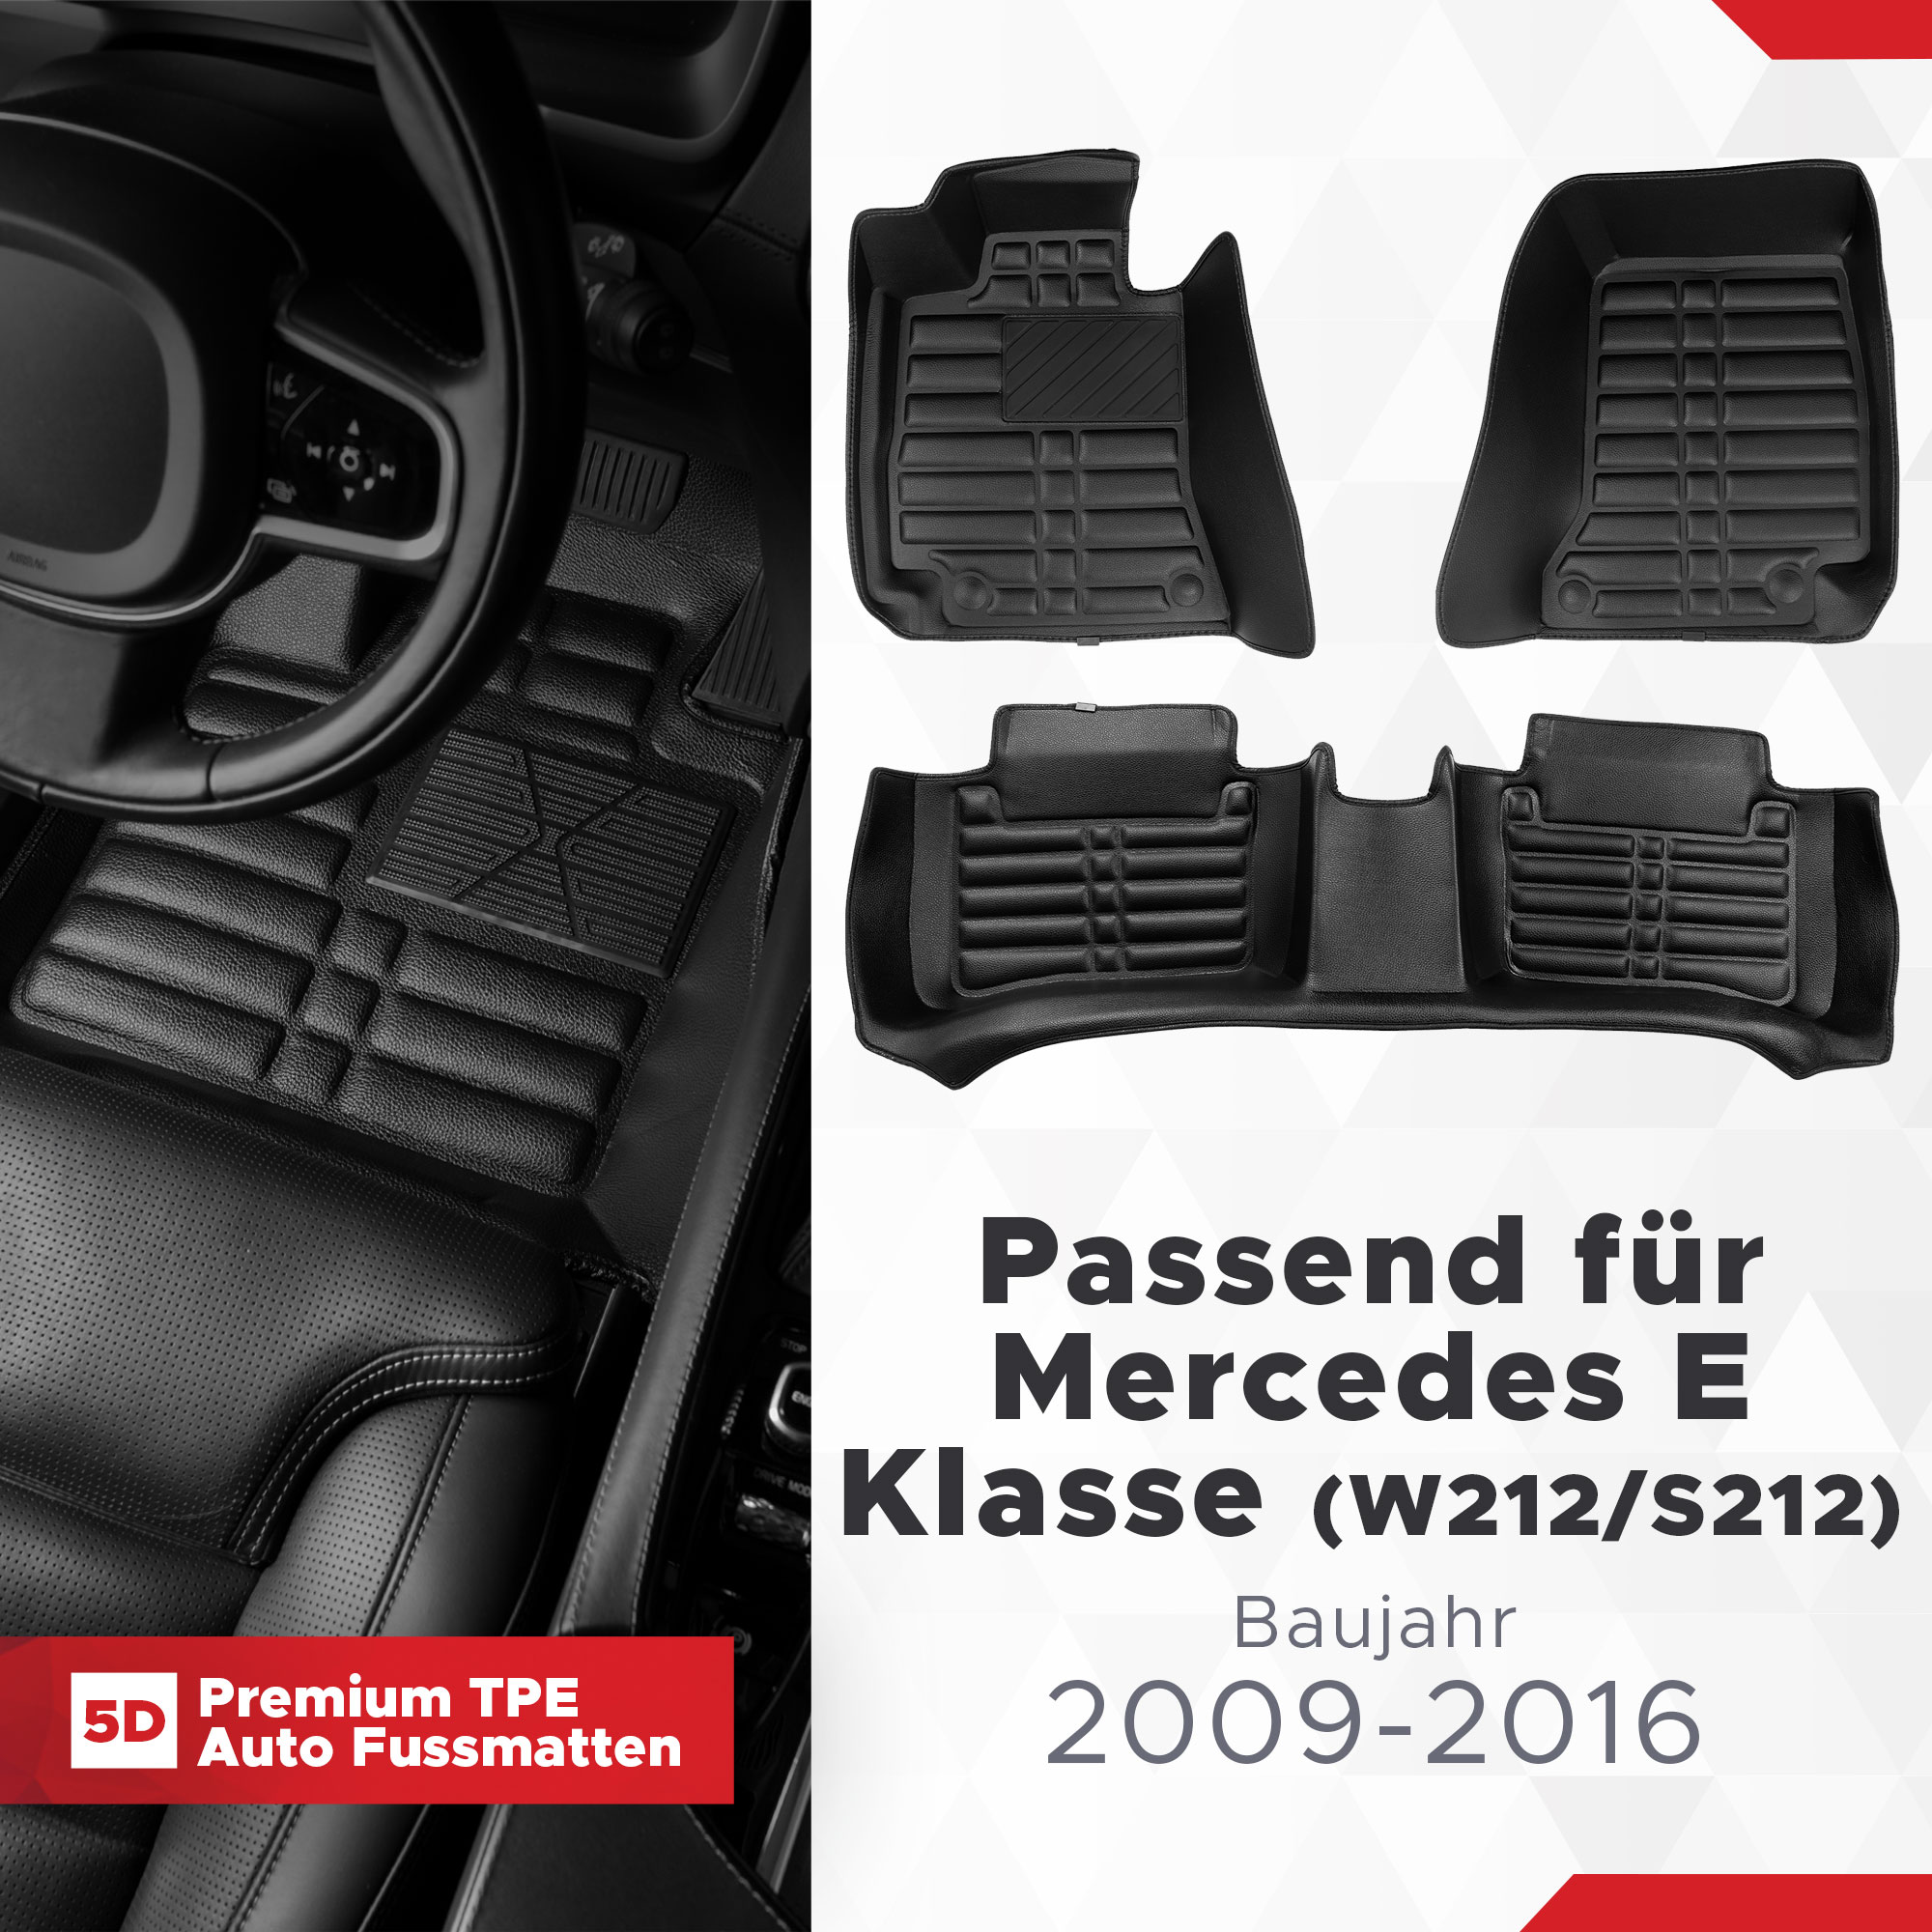 Fussmatten 2009-2016 Klasse Bj (W212/S212) Mercedes TPE E 5D